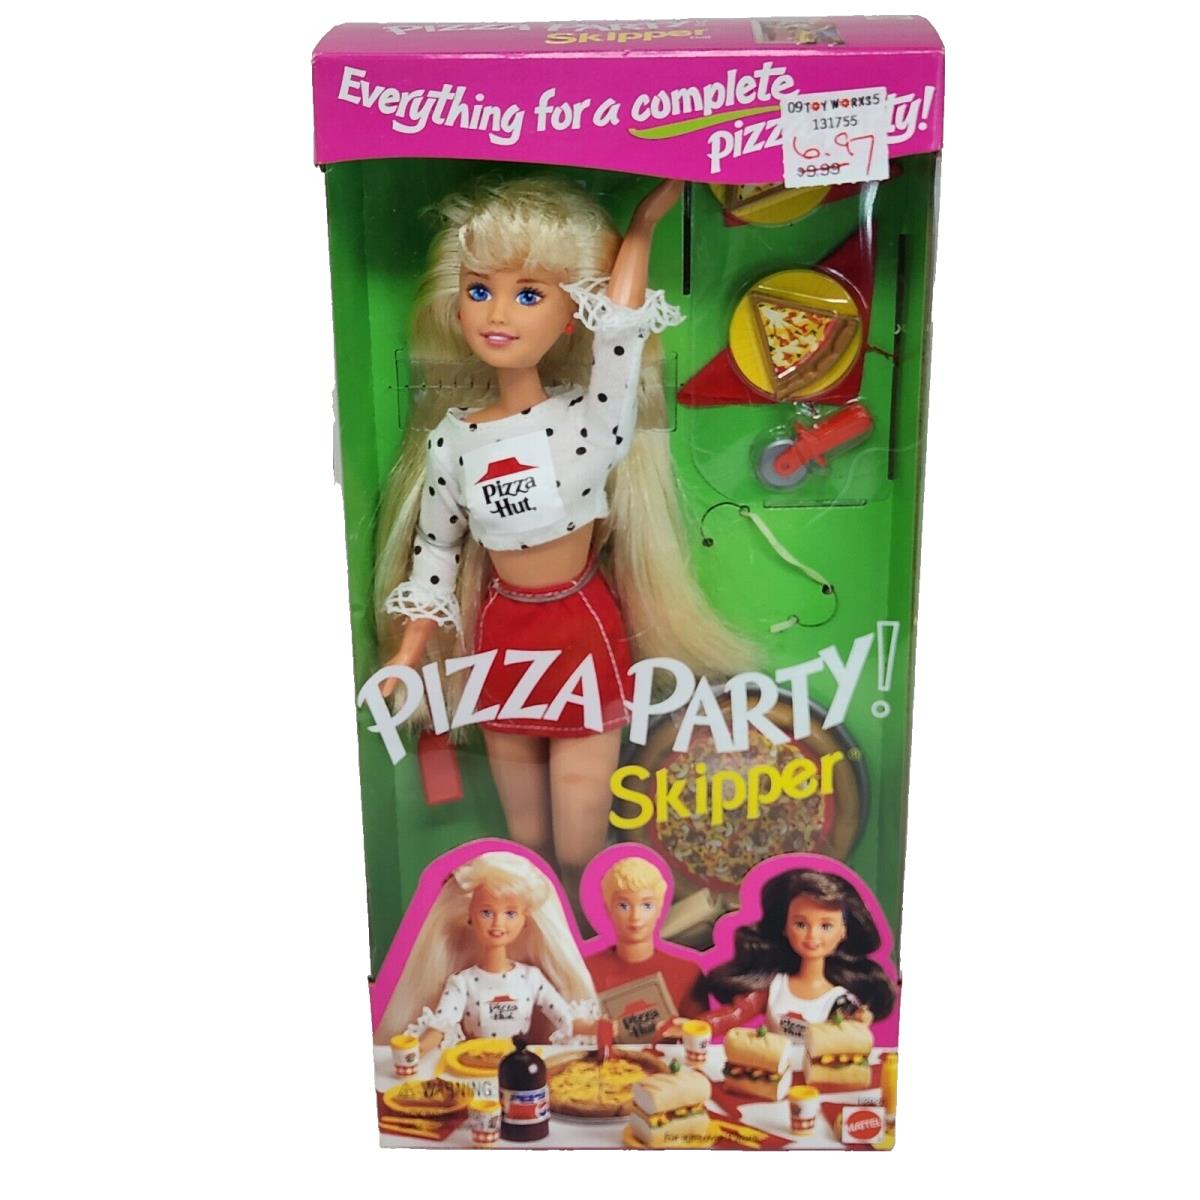 Vintage 1997 Pizza Party Skipper Barbie Doll 12920 Mattel Pizza Hut